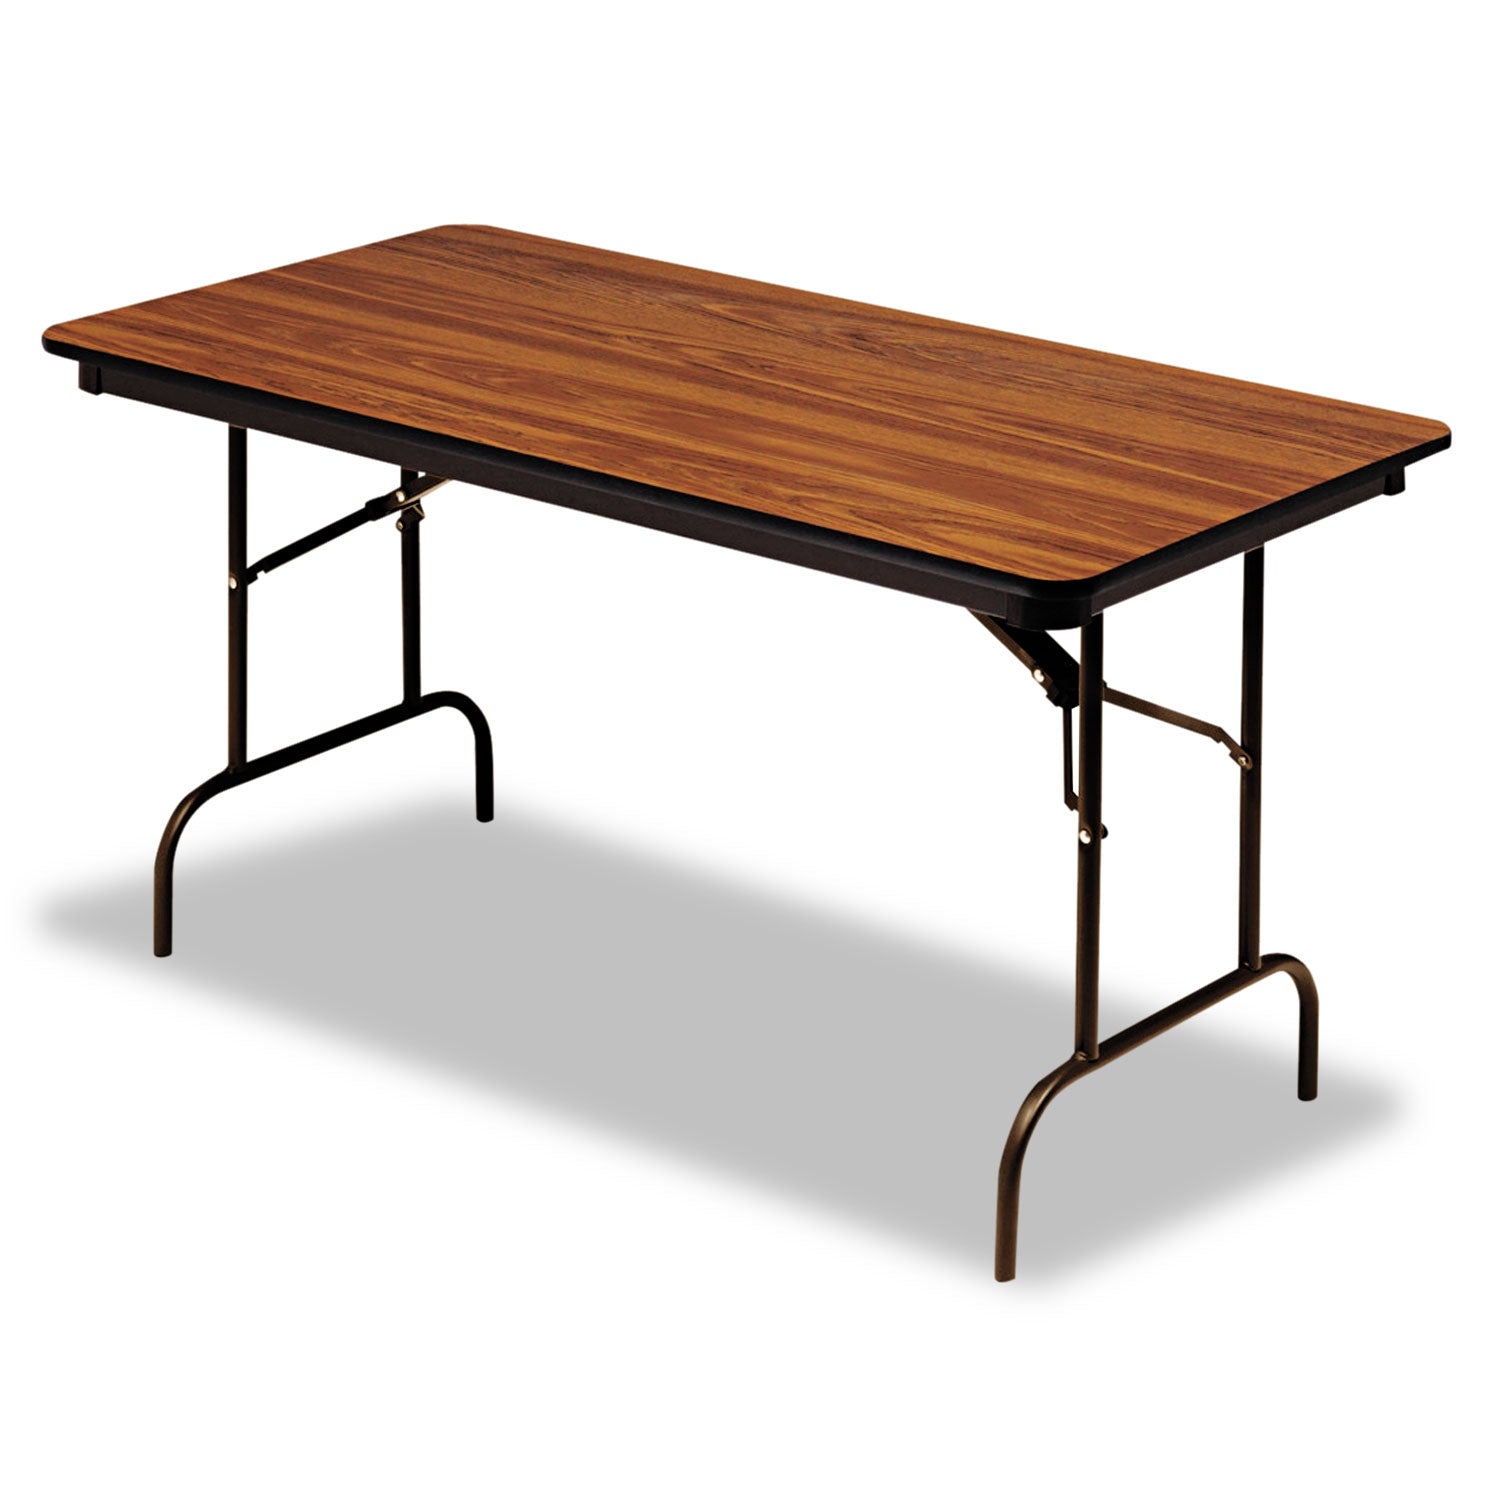 OfficeWorks Commercial Wood-Laminate Folding Table, Rectangular, 72" x 30" x 29", Oak - 